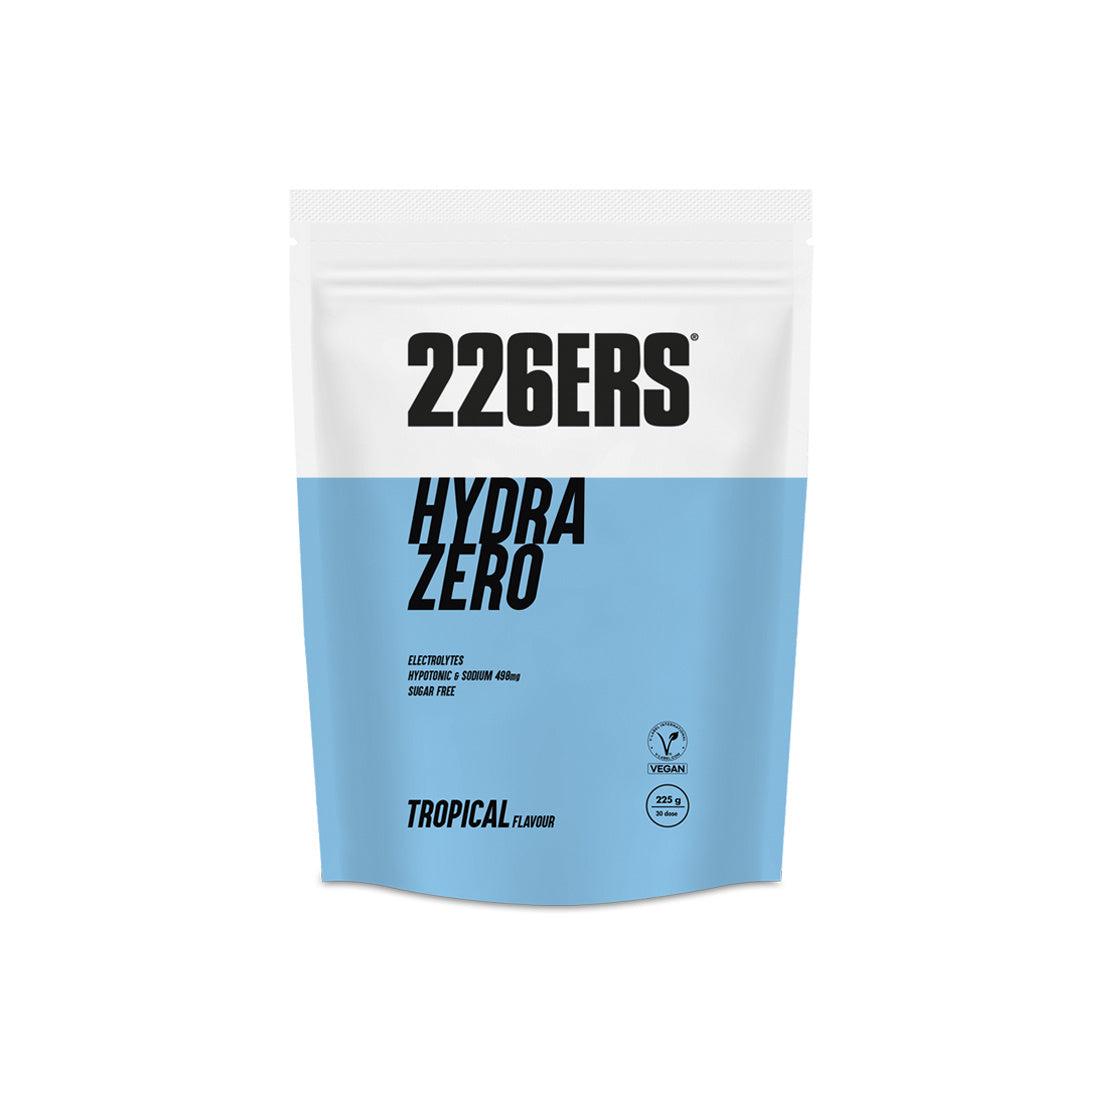 226ERS Hydrazero Drink Electrolyten